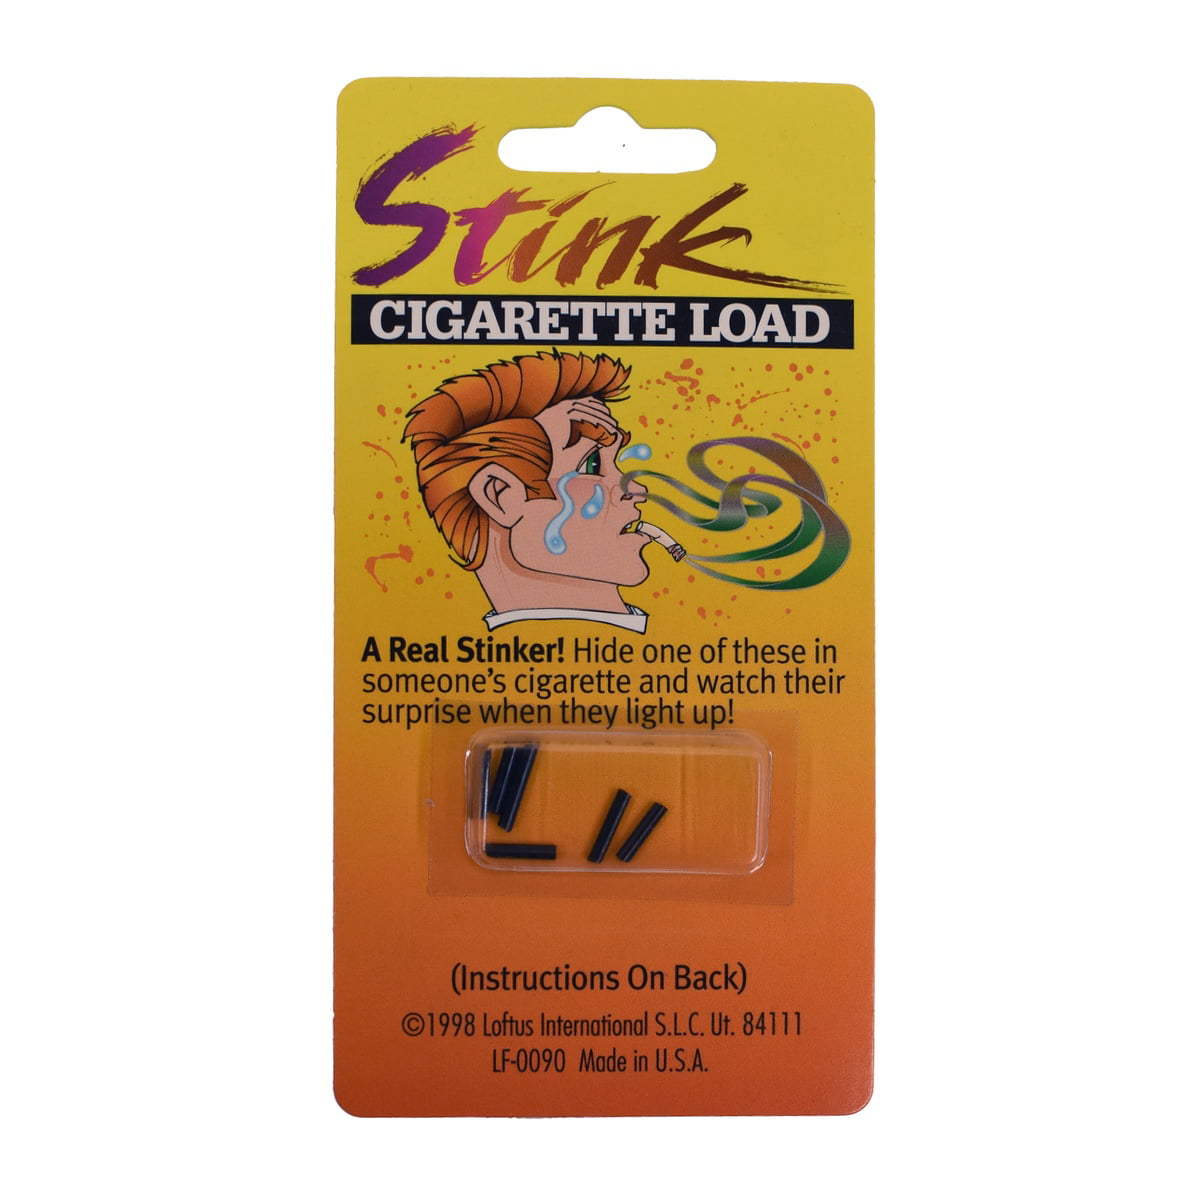 Cigarette Load Stink Bomb Smoker Practical Quit Smoking Odor Gag Gift Walmart.com